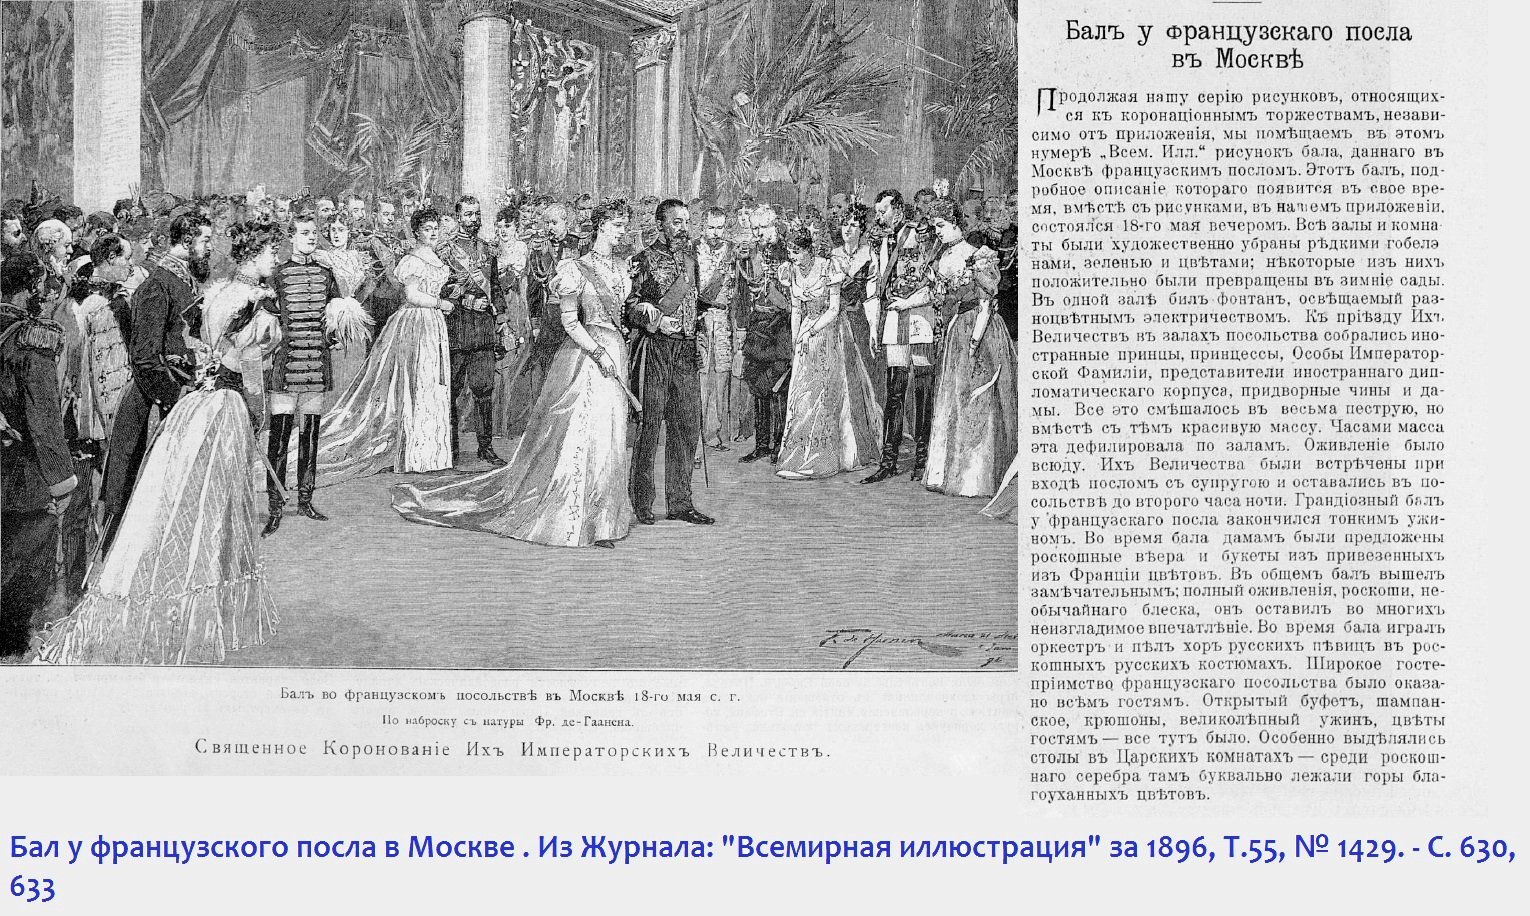 Бал мышковской 29.12 1896 как назывался